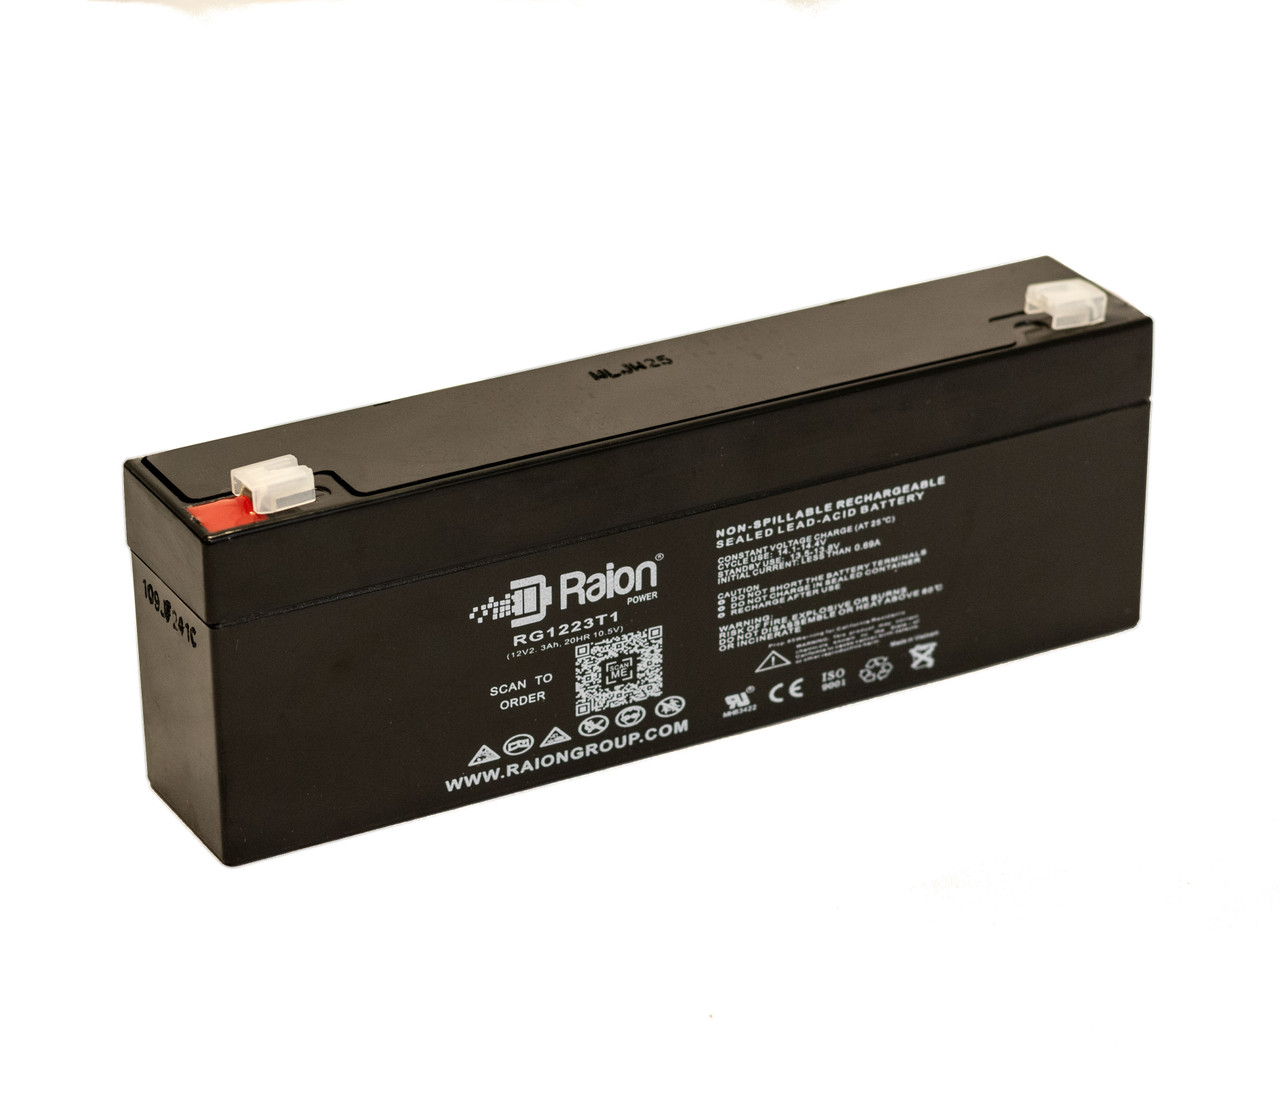 Raion Power RG1223T1 Replacement Battery for Diamec DM12-1.8